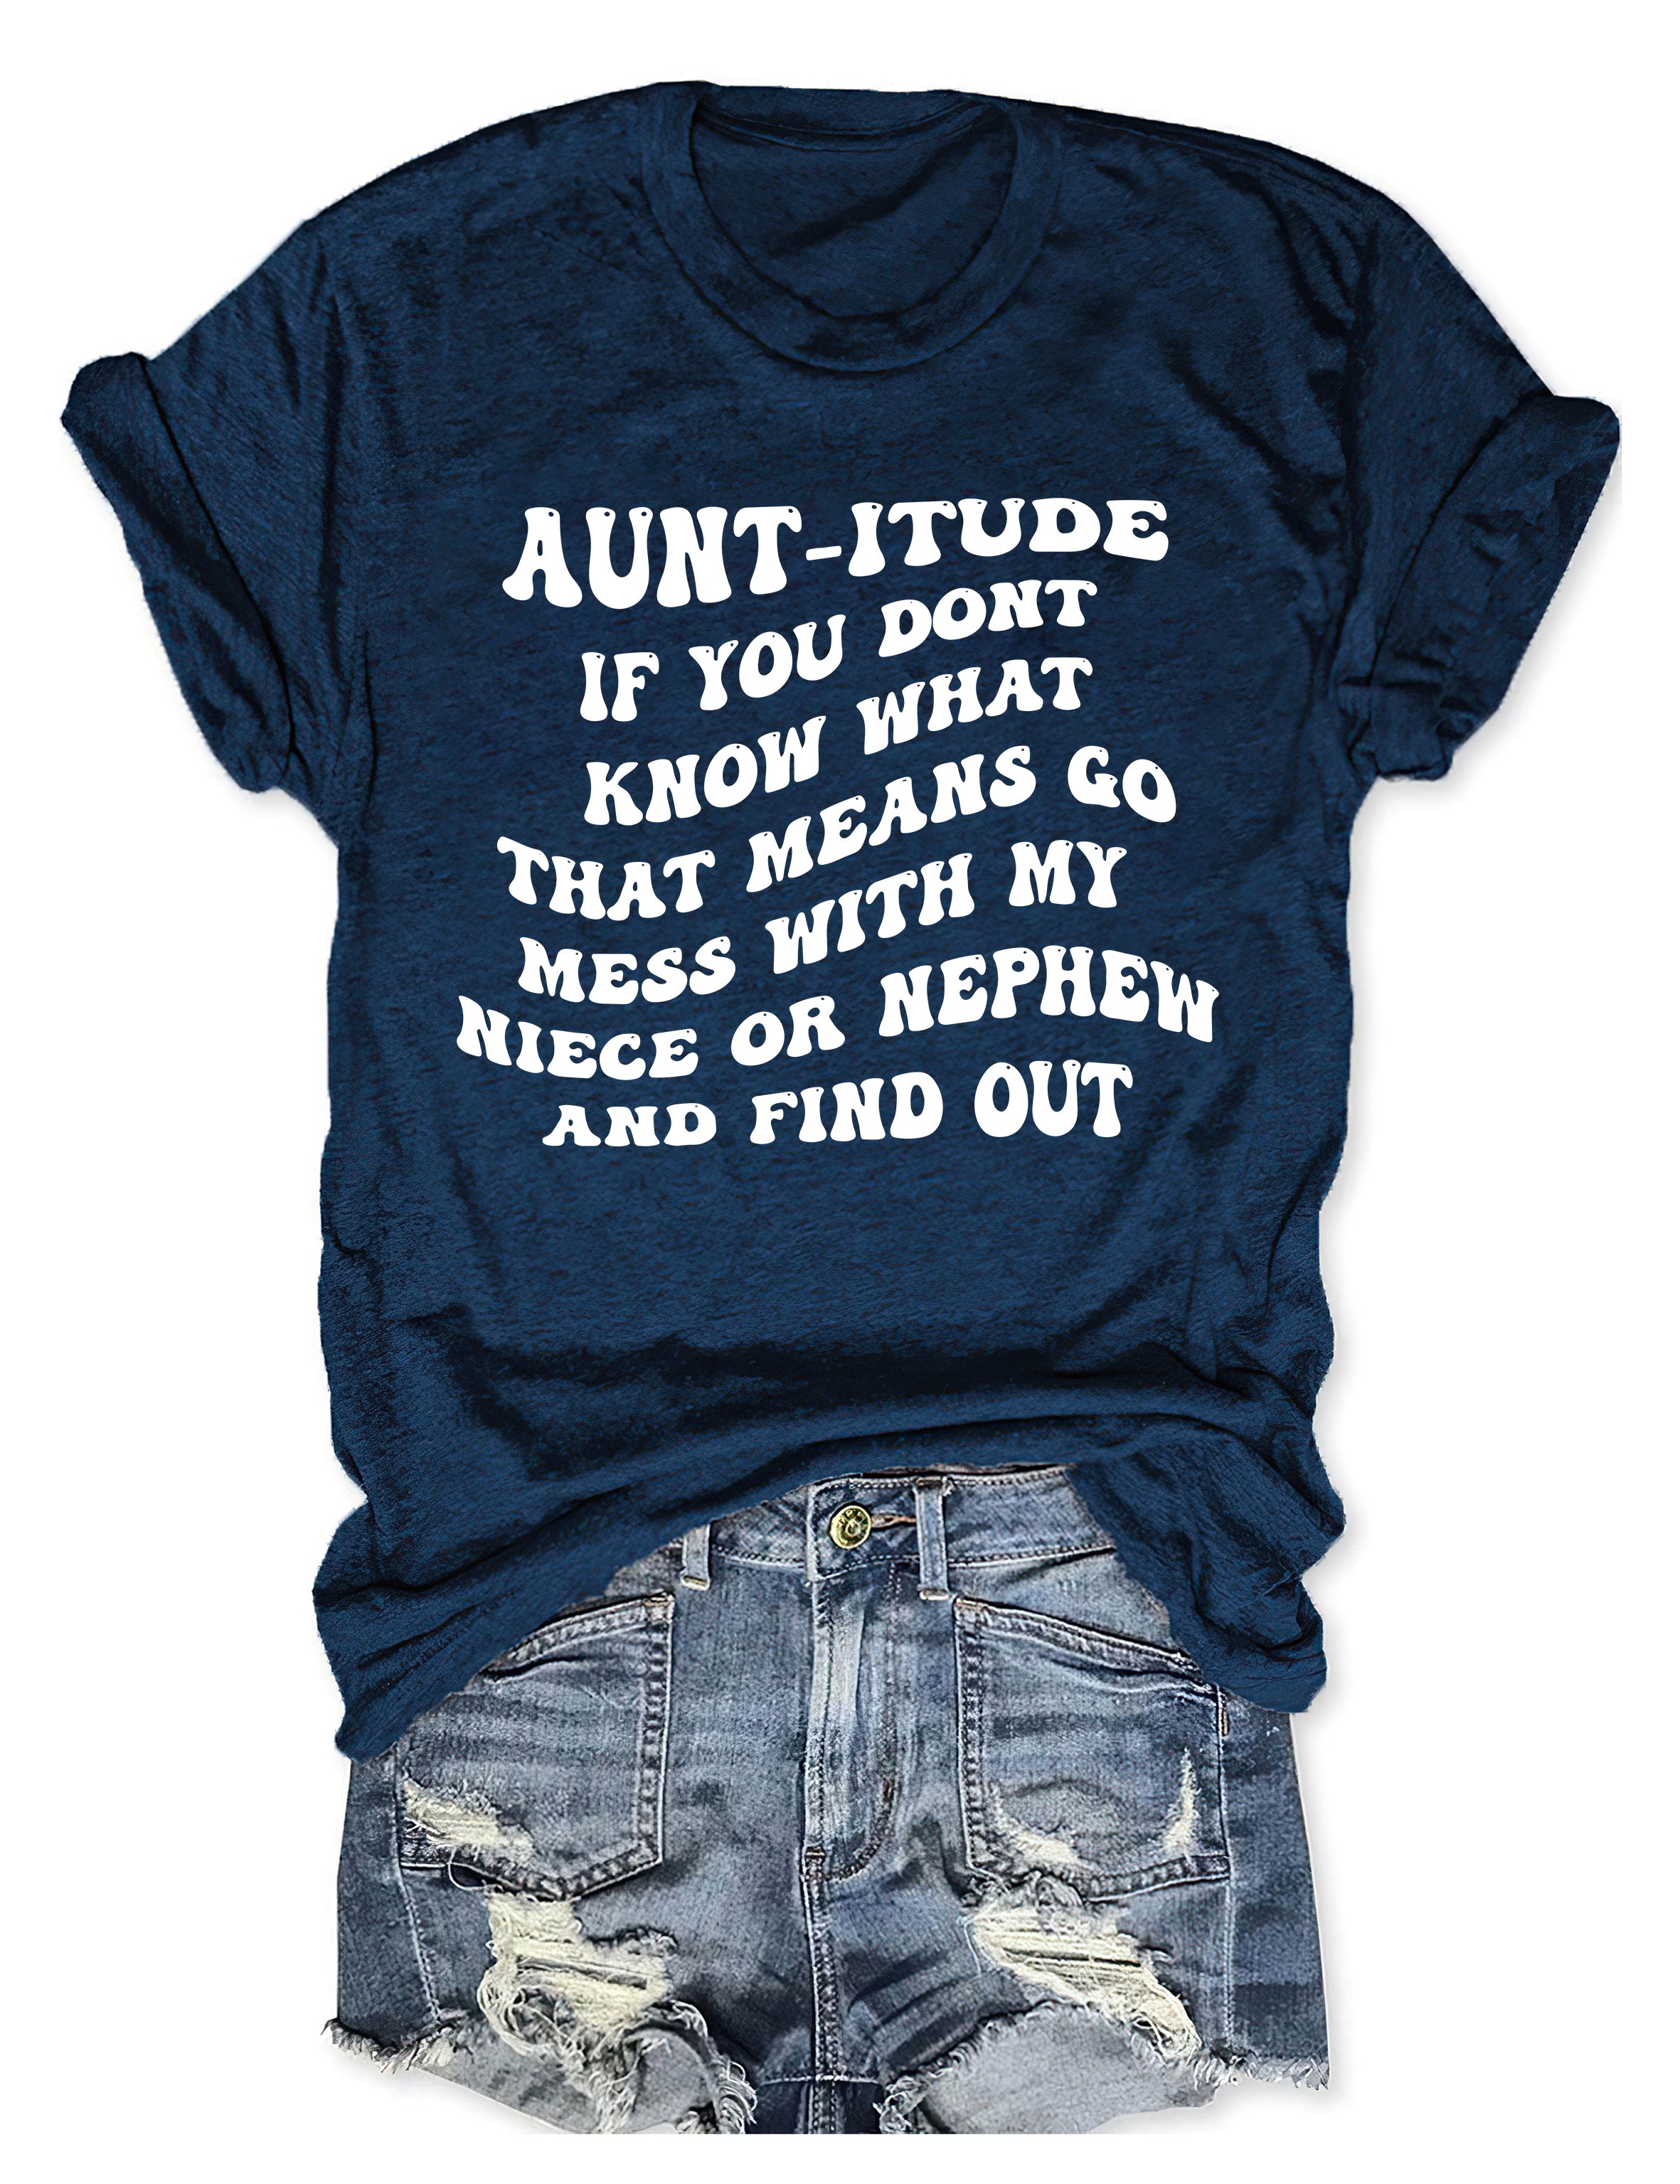 Aunt-itude T-shirt